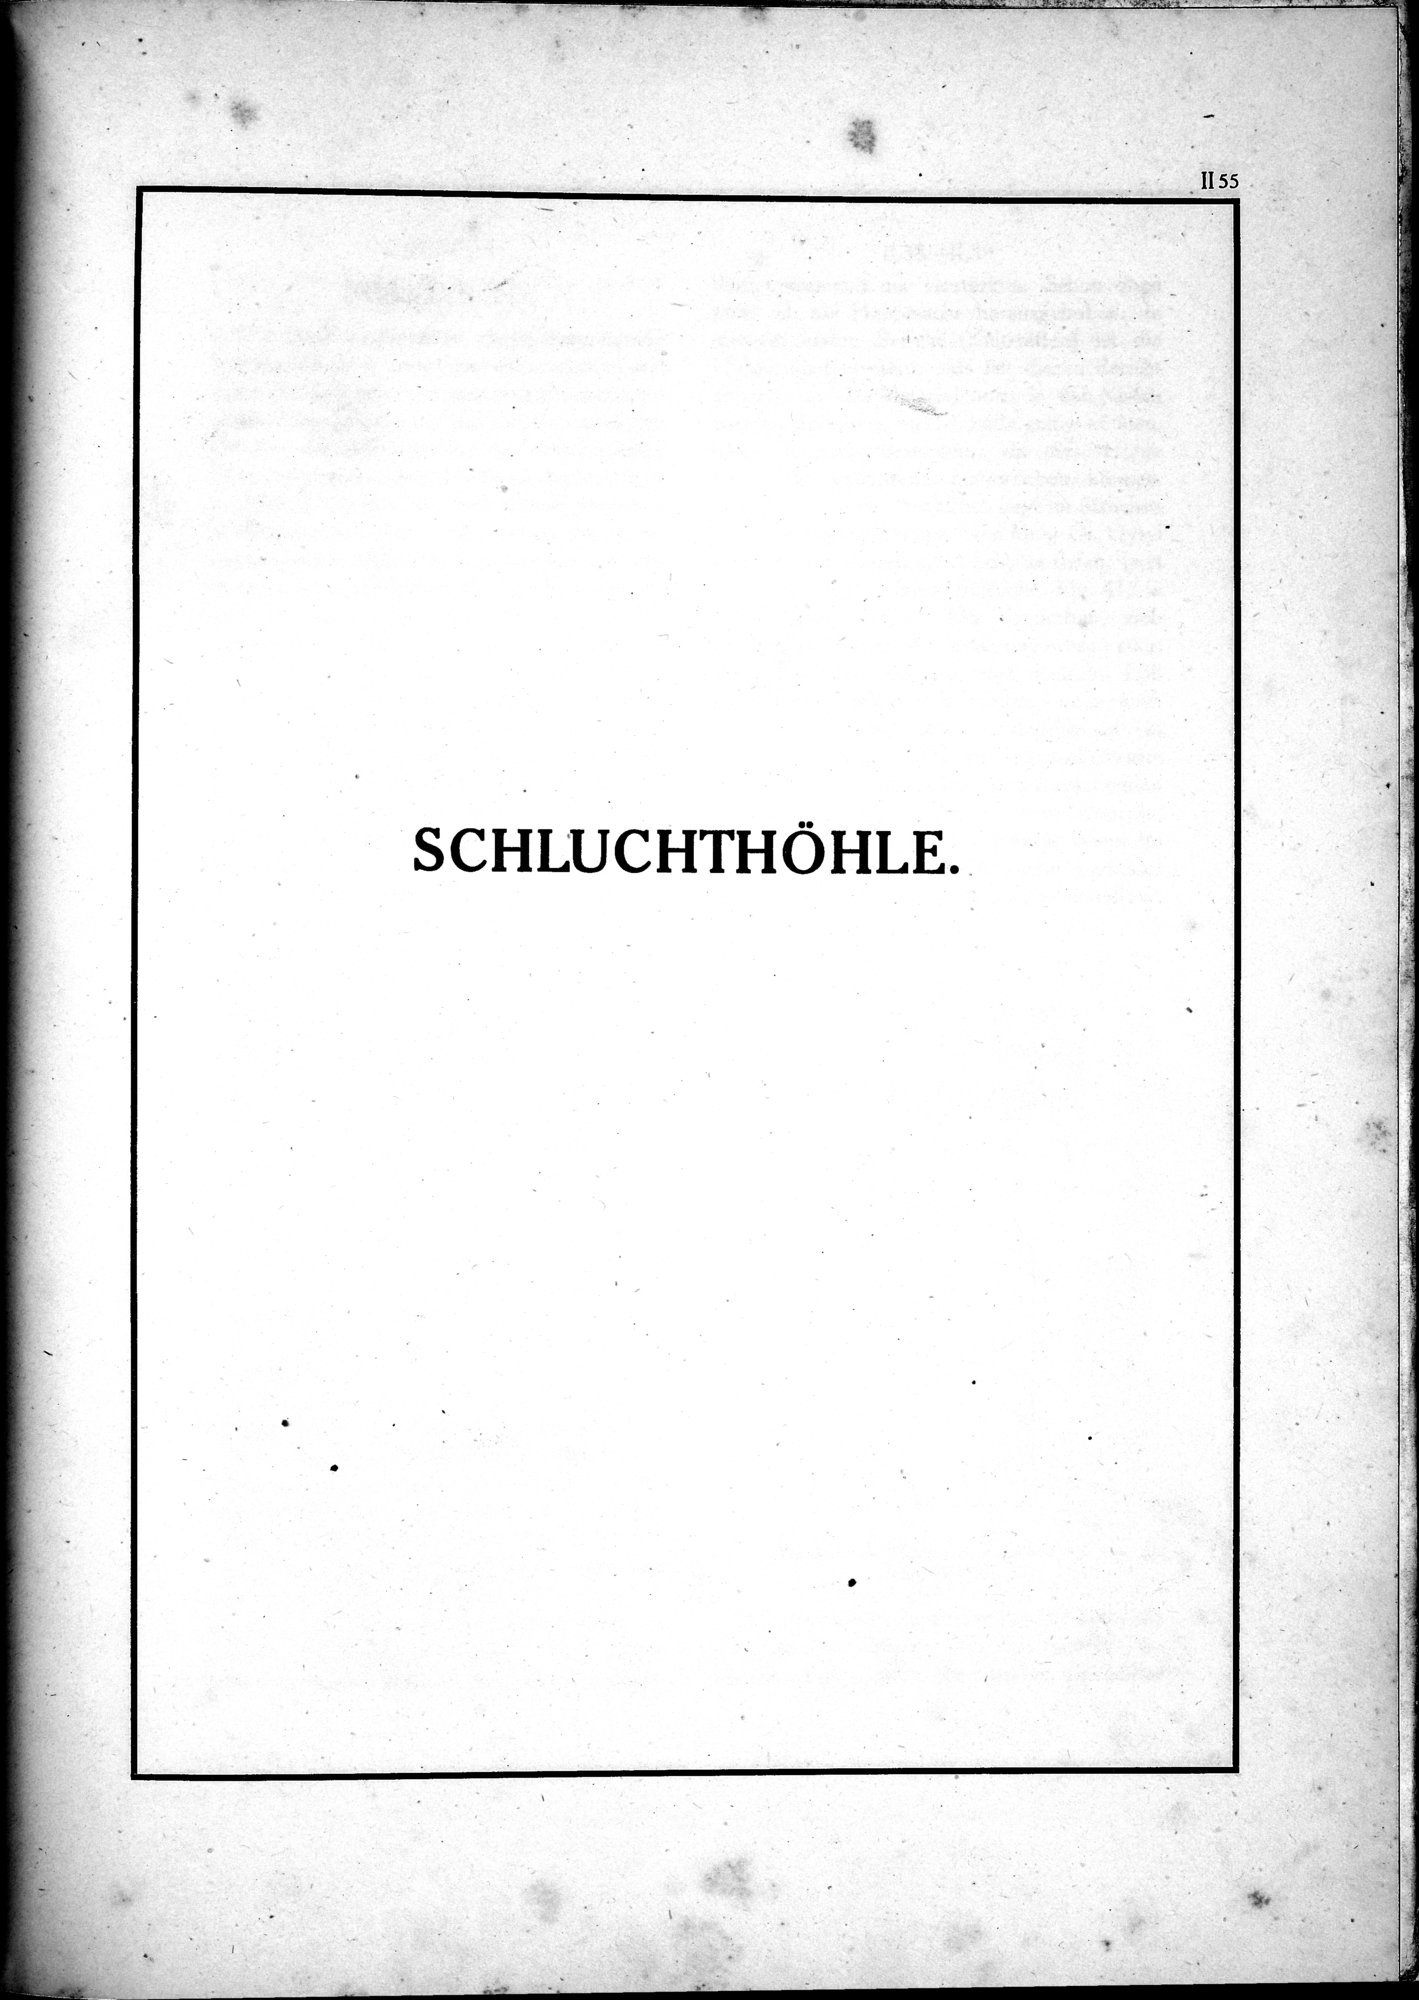 Alt-Kutscha : vol.1 / Page 165 (Grayscale High Resolution Image)